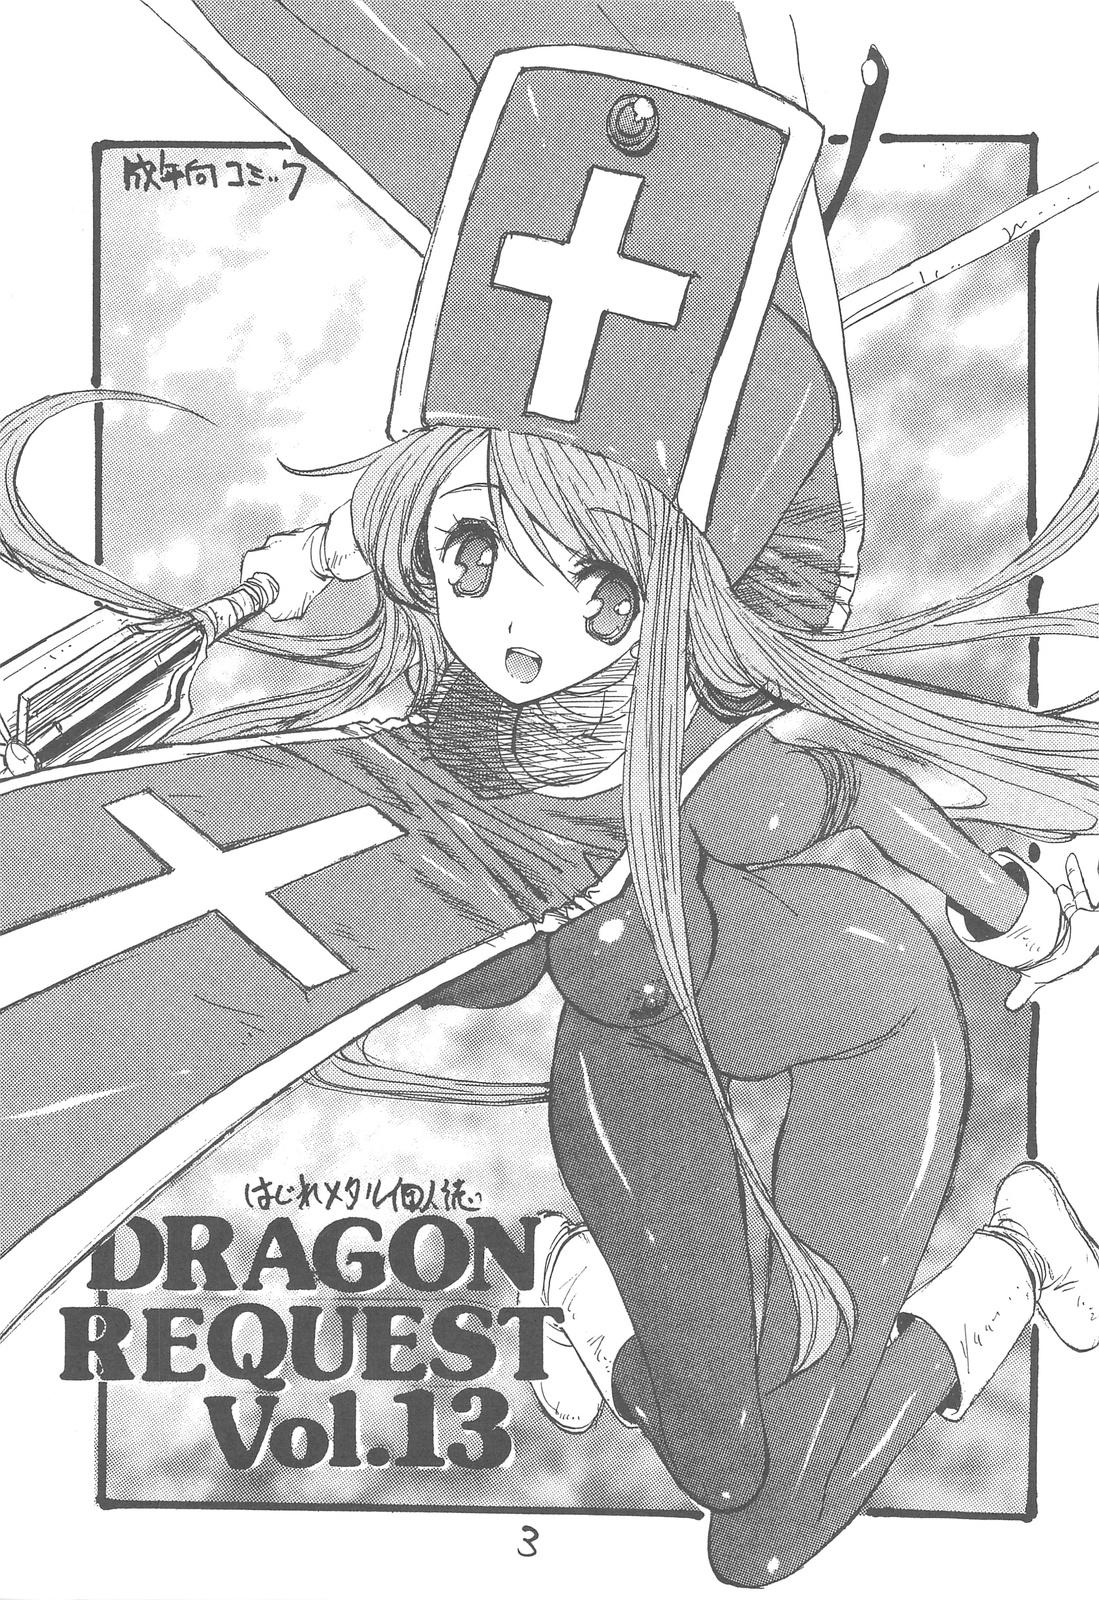 Solo DRAGON REQUEST Vol.13 - Dragon quest iii Facebook - Page 2